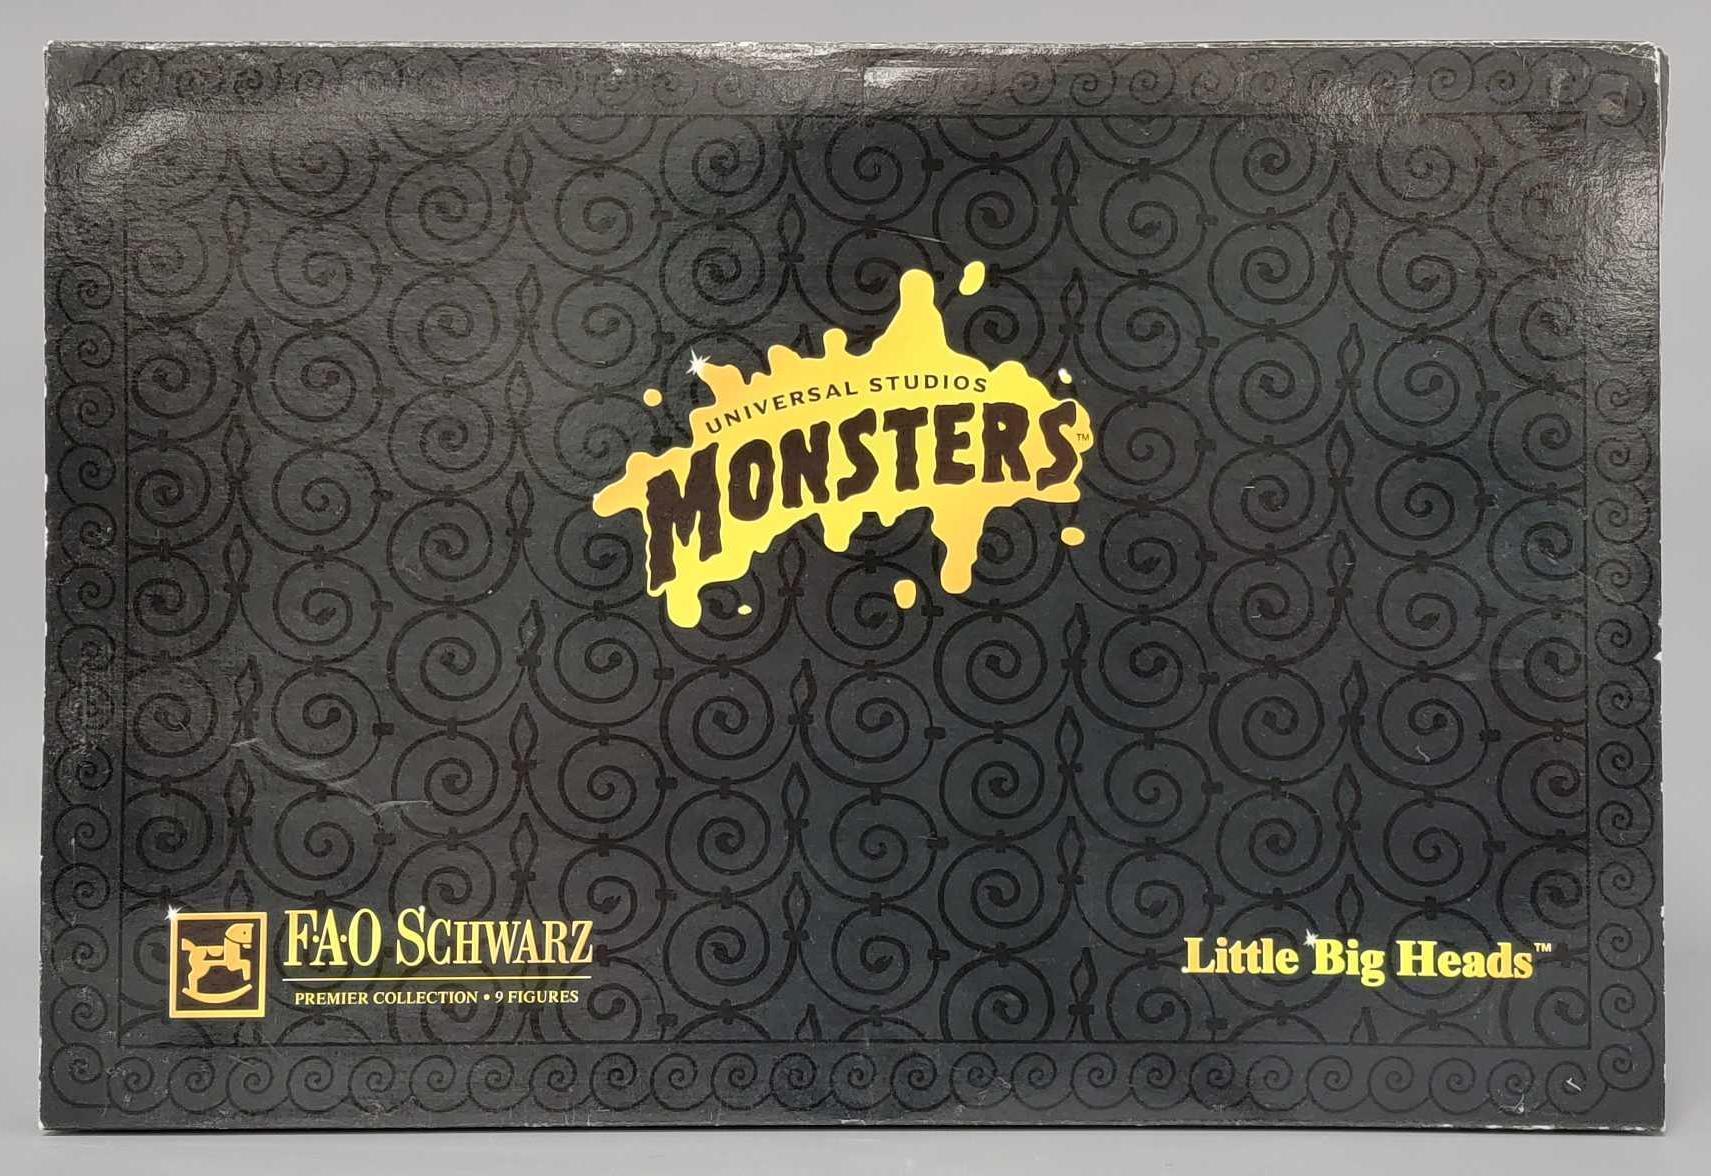 FAO Schwarz Little Big Heads Universal Studios Monsters 9 piece set